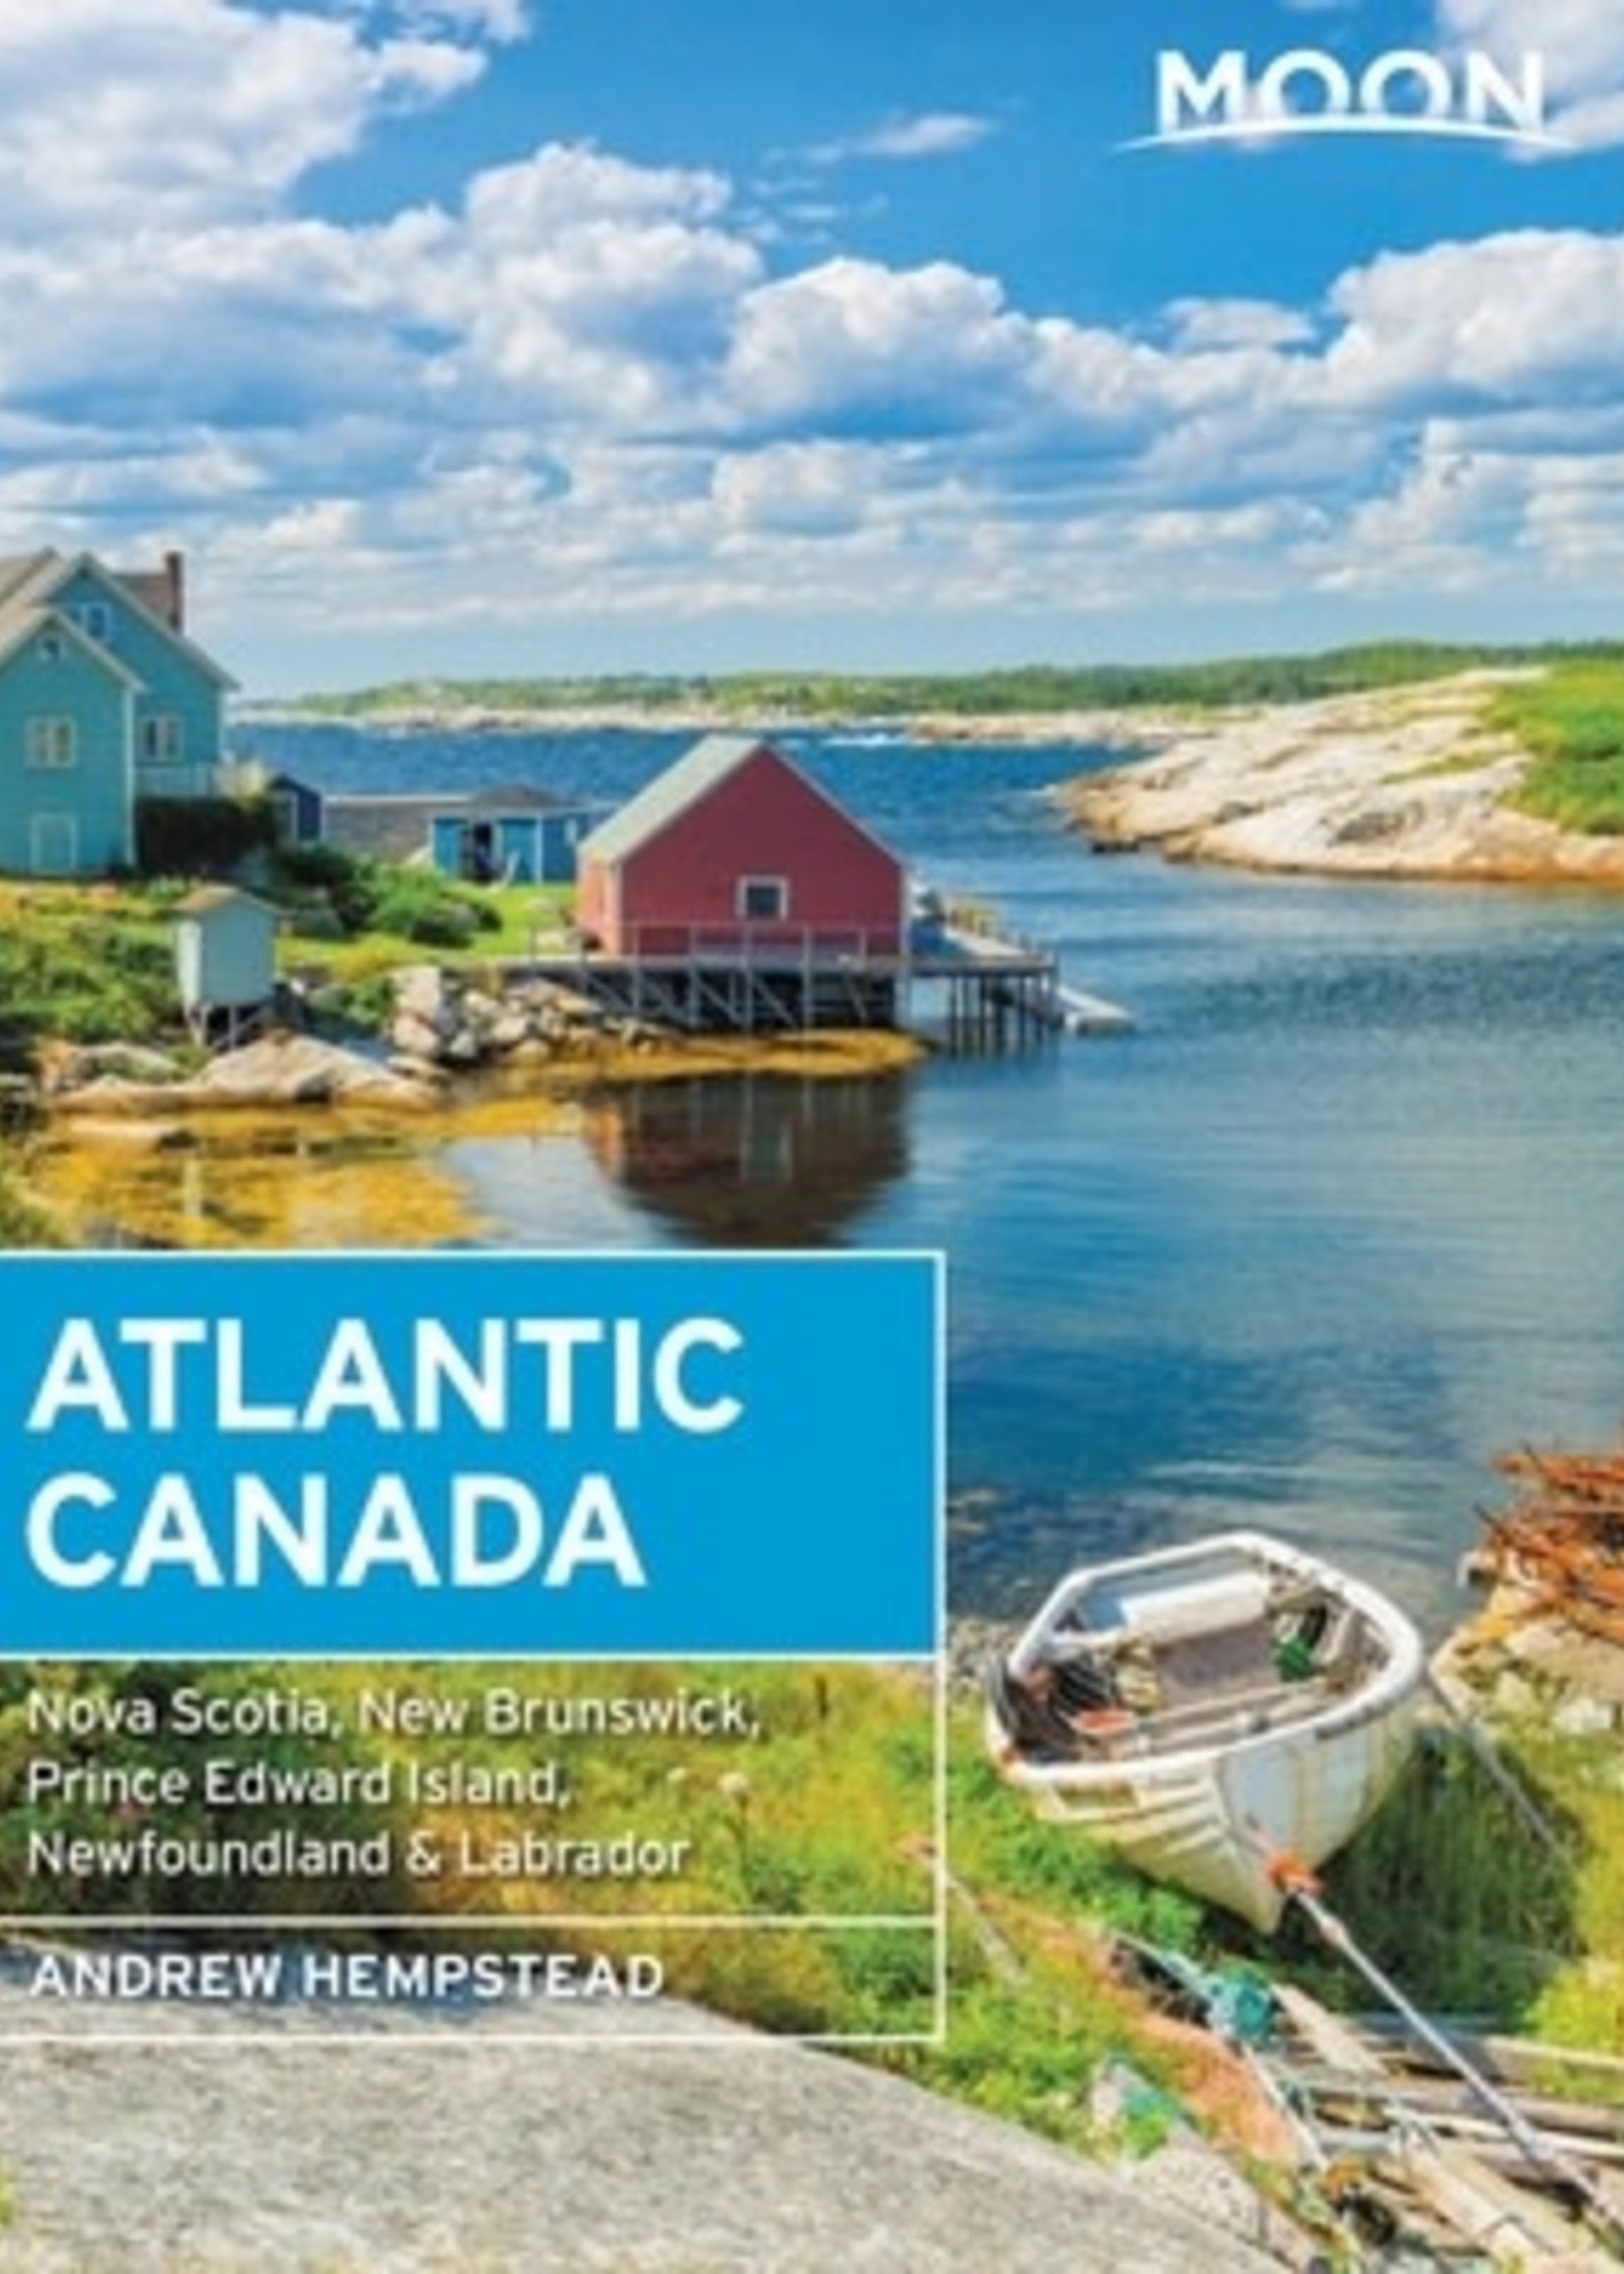 Moon Atlantic Canada: Nova Scotia, New Brunswick, Prince Edward Island, Newfoundland Labrador by Andrew Hempstead